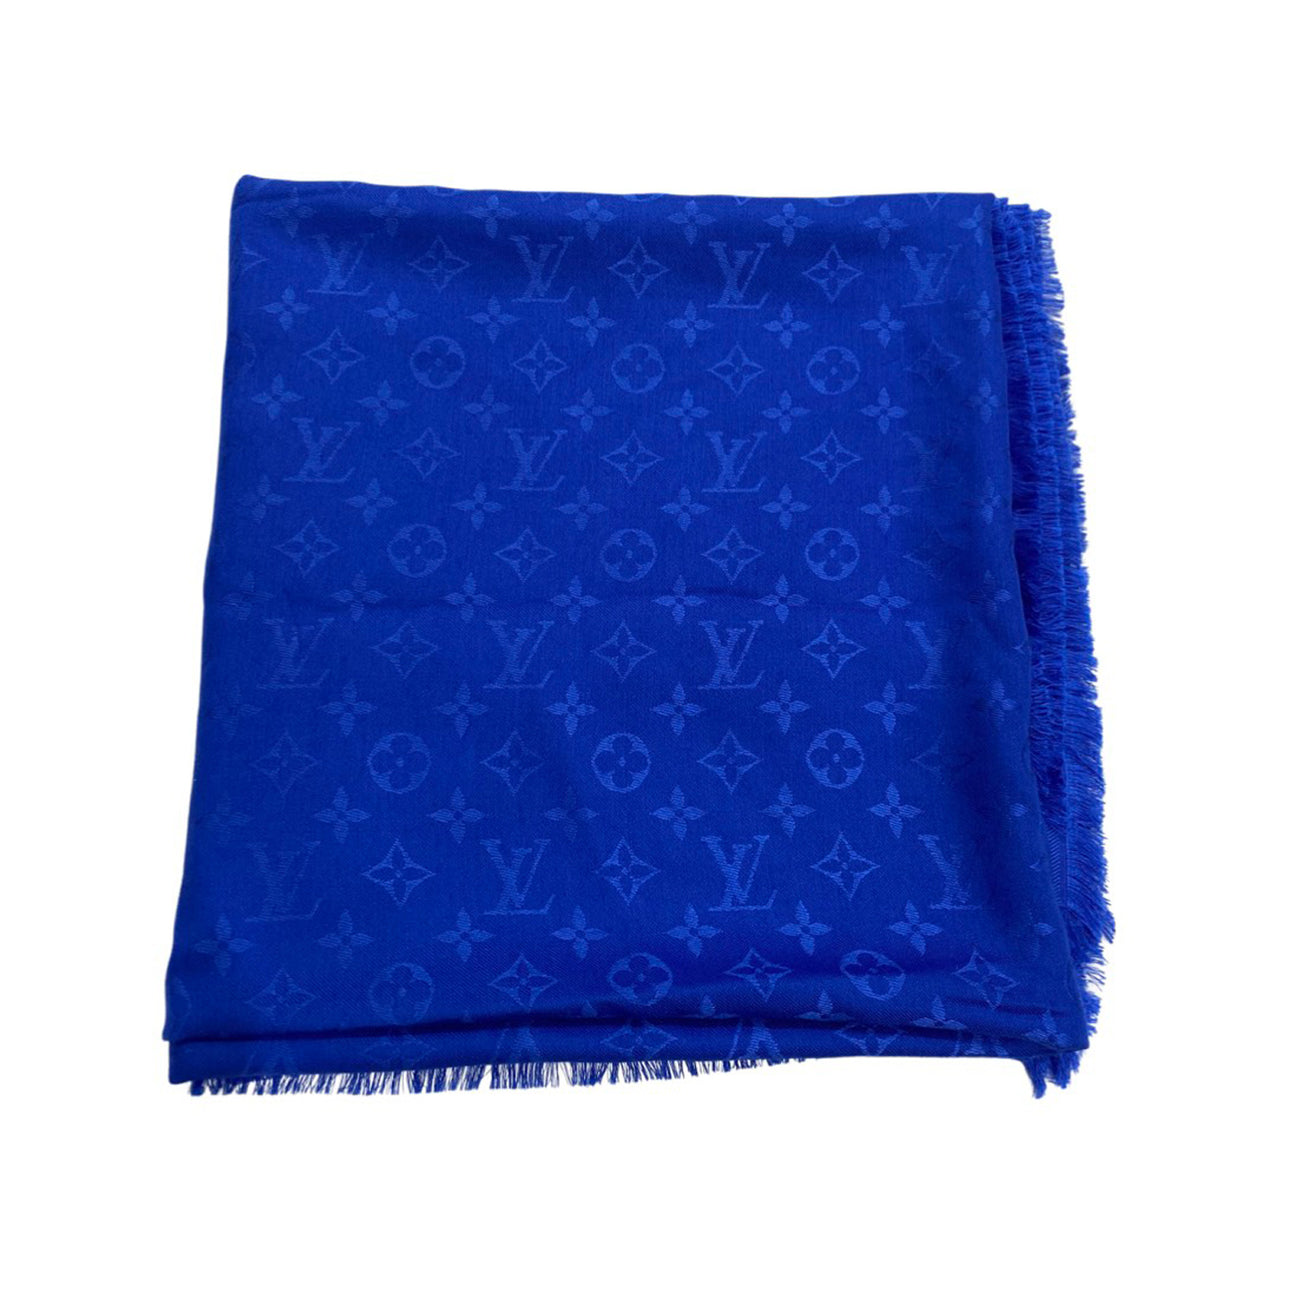 Louis Vuitton Monogram Shawl Blue